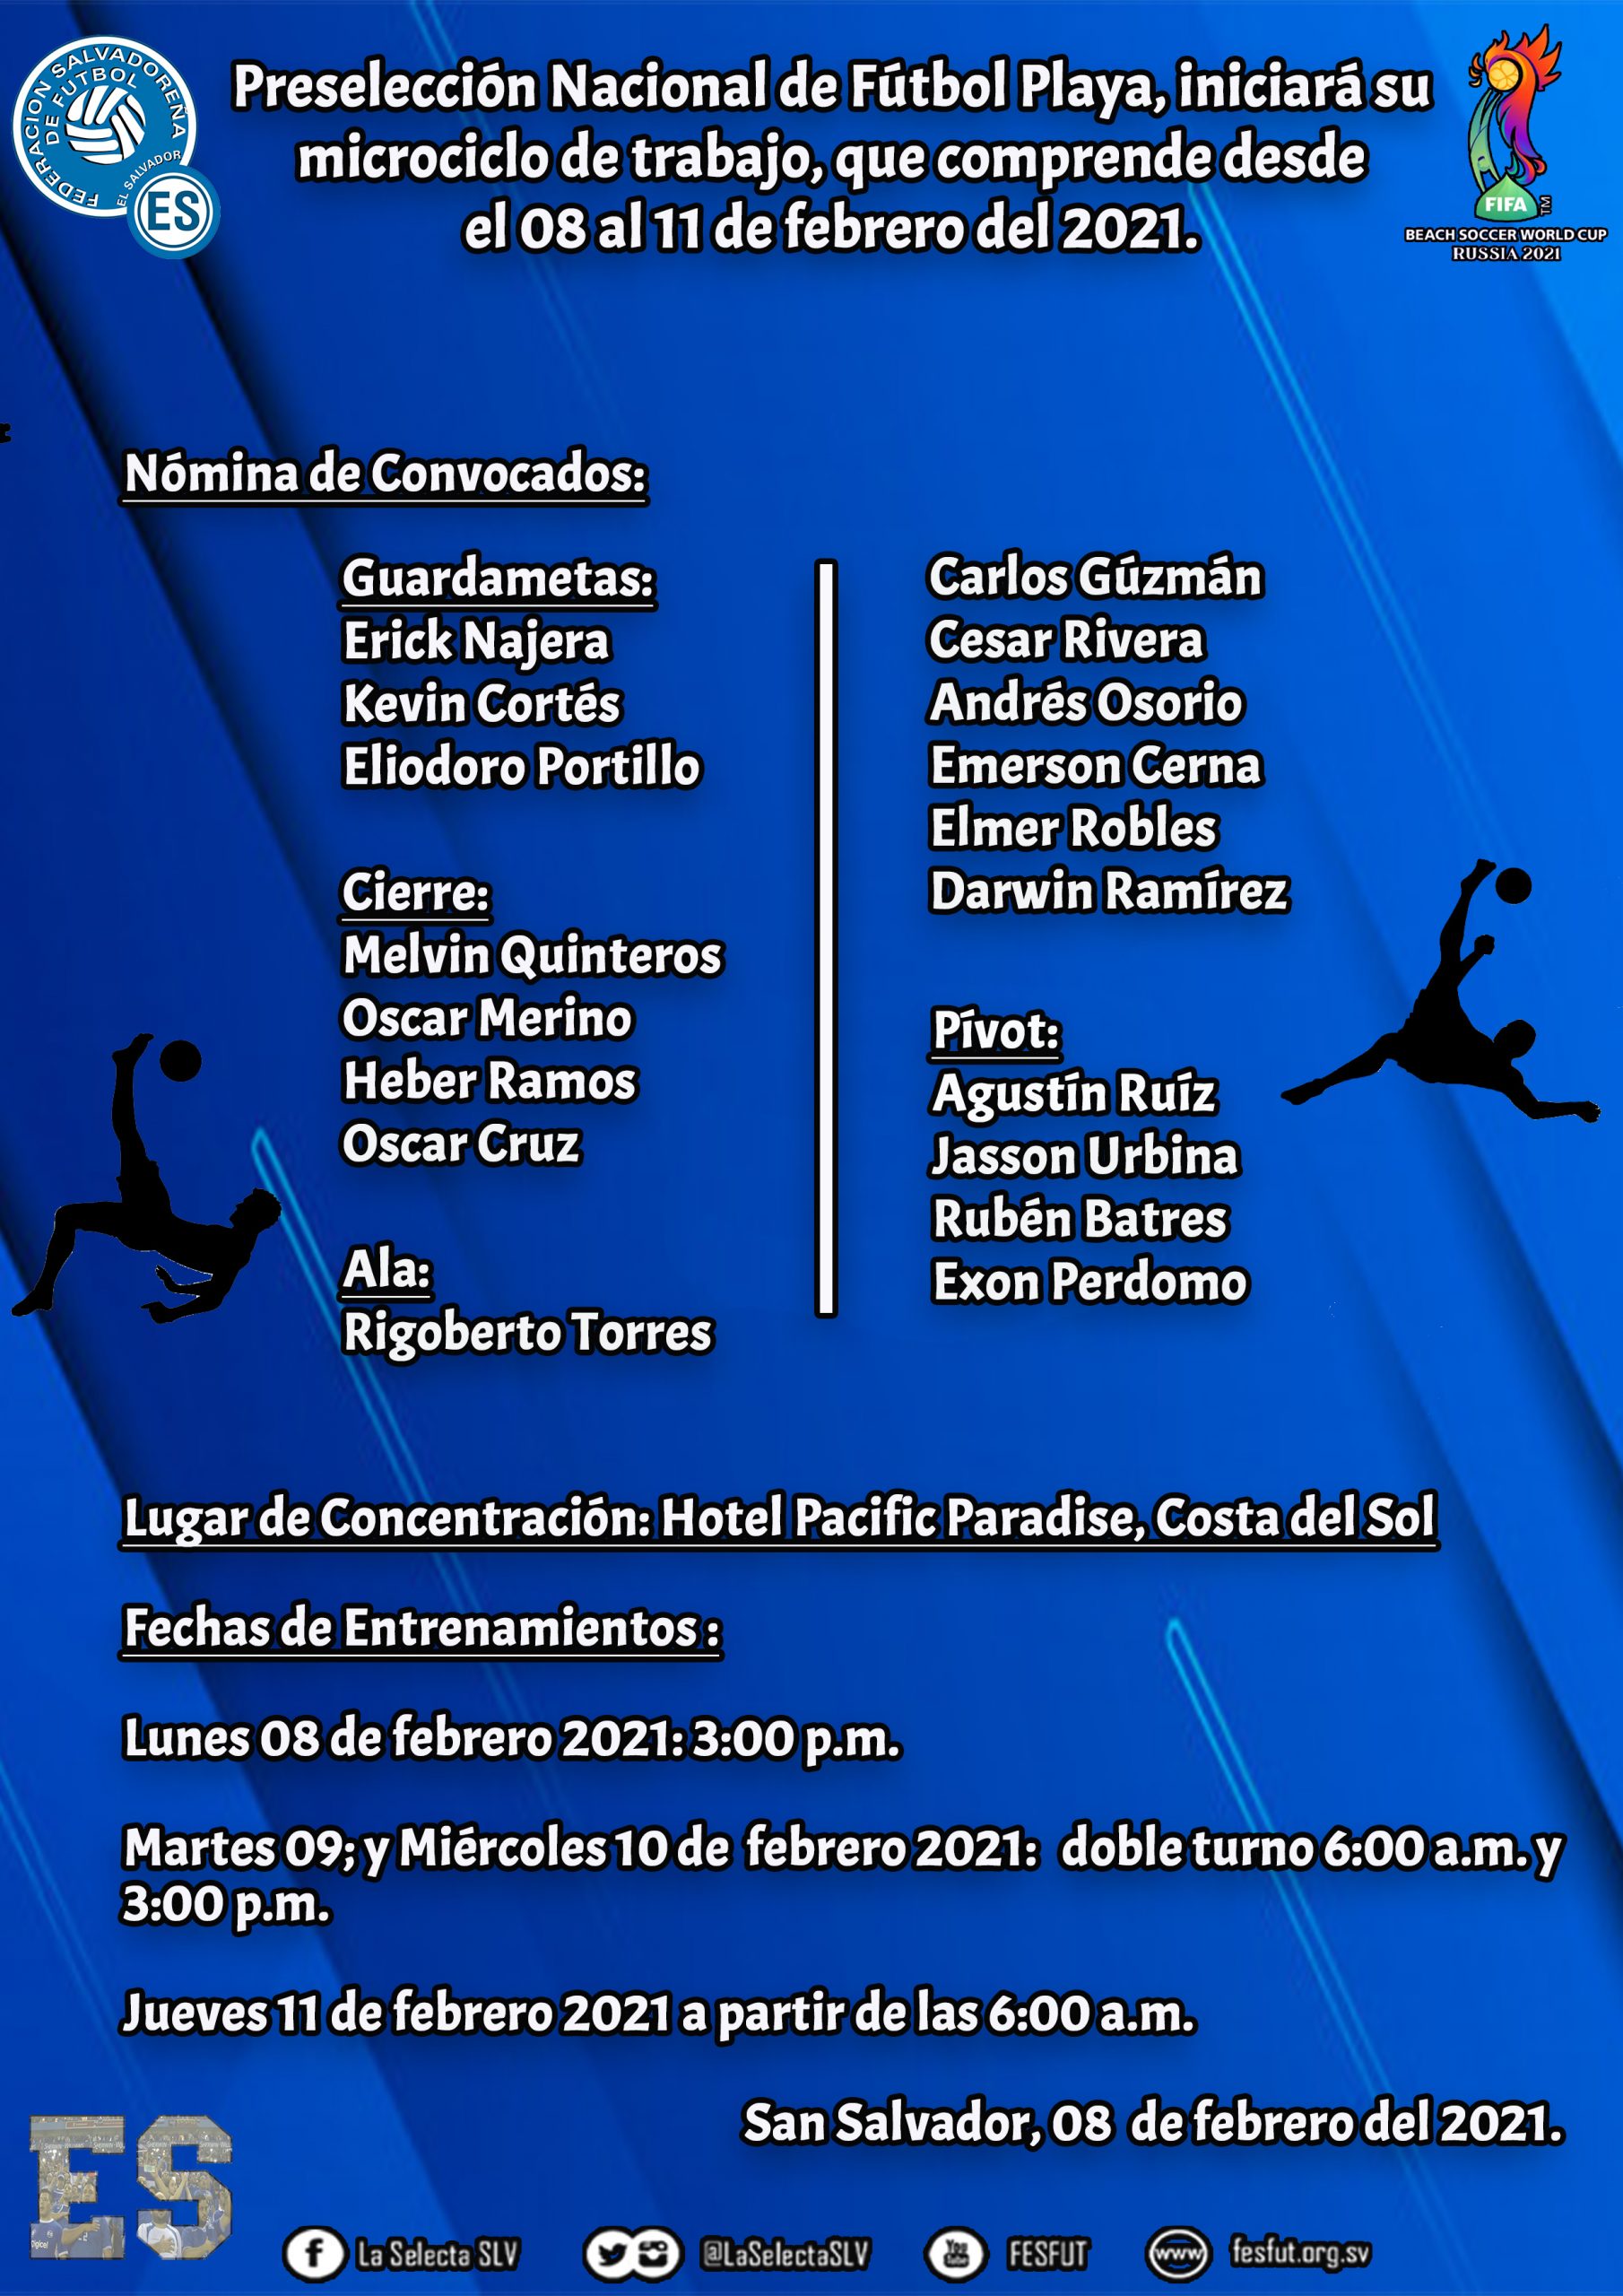 La Selección Nacional de Fútbol Playa se coronó campeona de El Salvador  Beach Beach Soccer Cup 2022. – Federación Salvadoreña de Fútbol